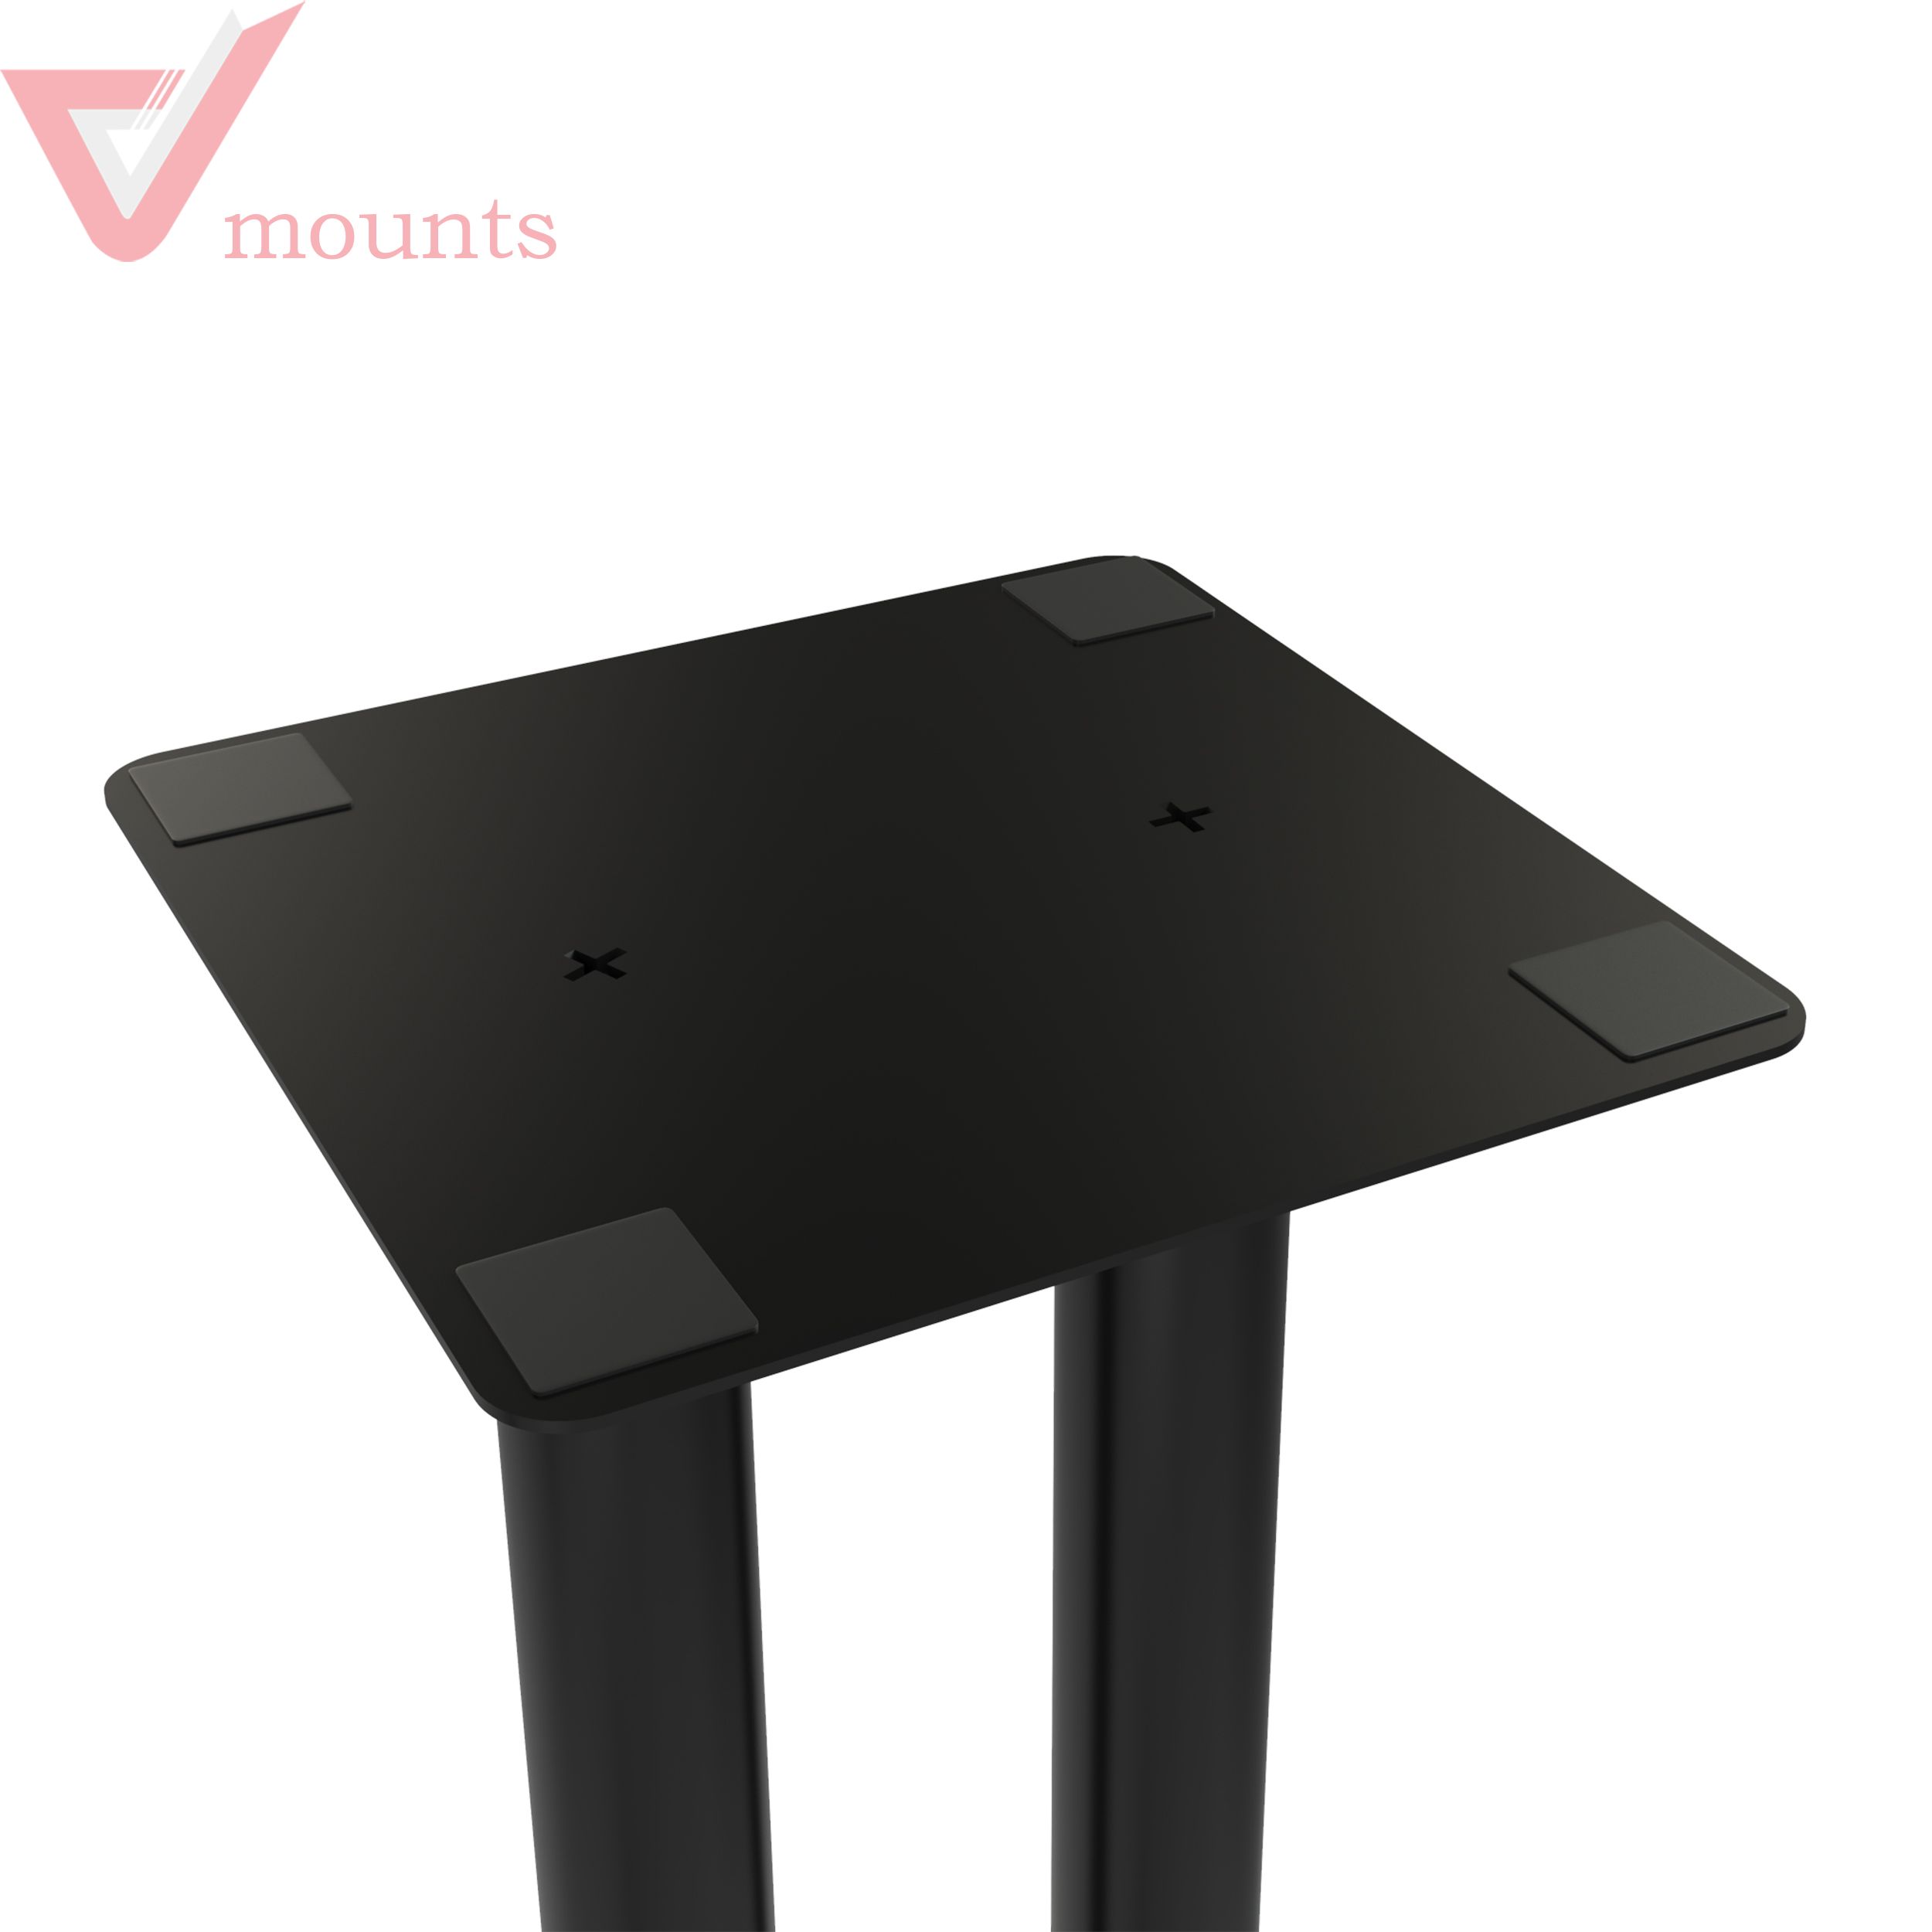 Floor Stand Speaker Mount VM-S05